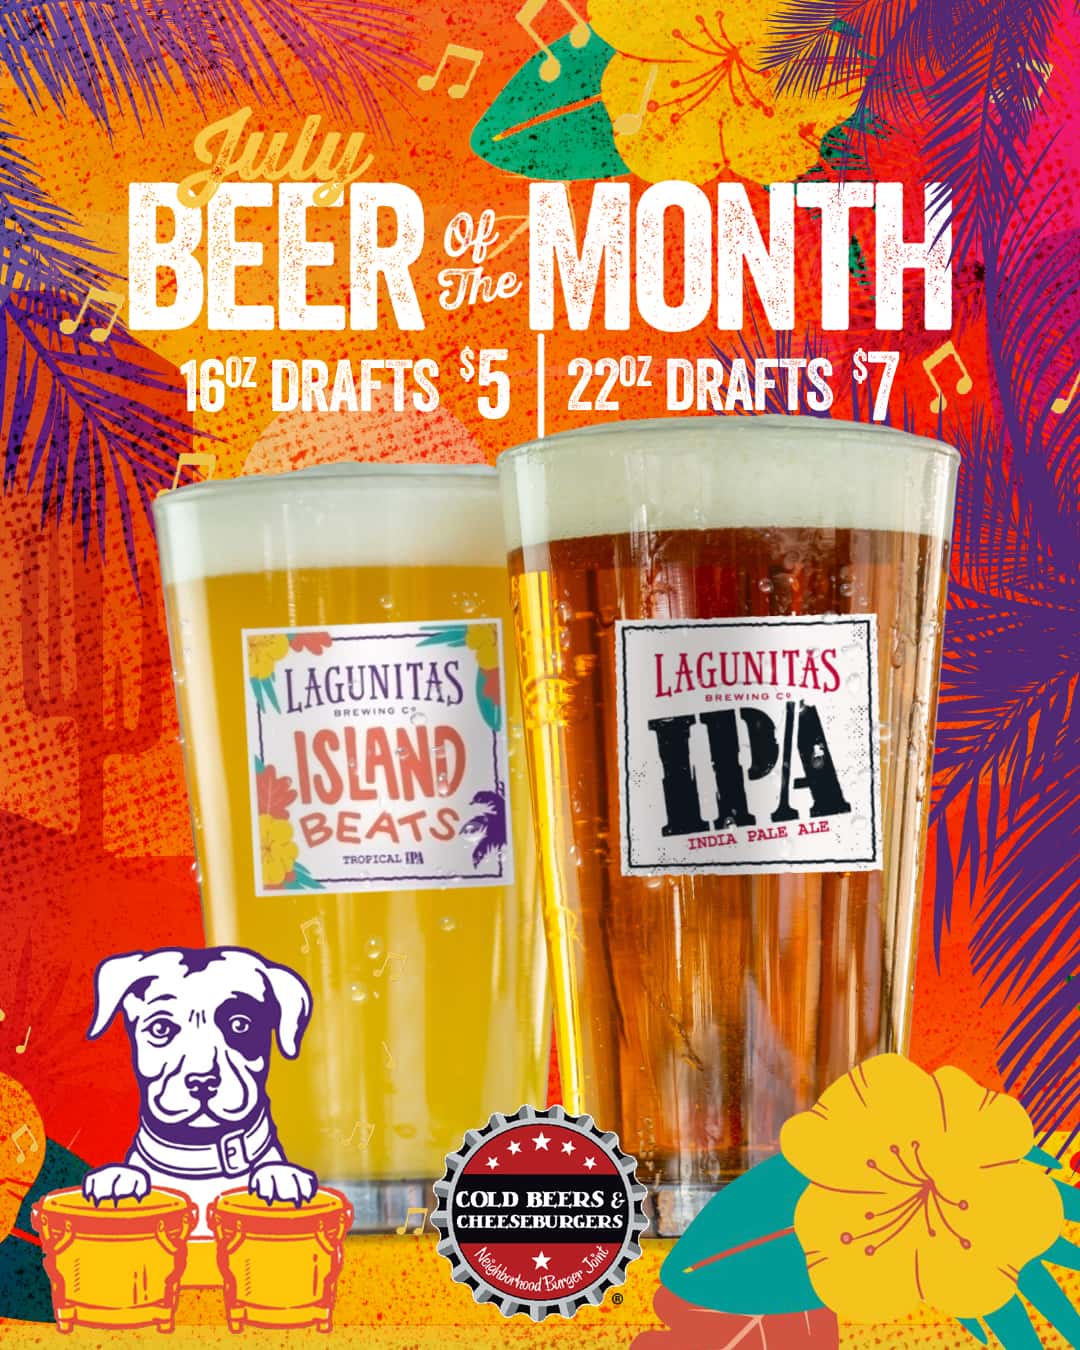 Lagunitas Beer of the Month